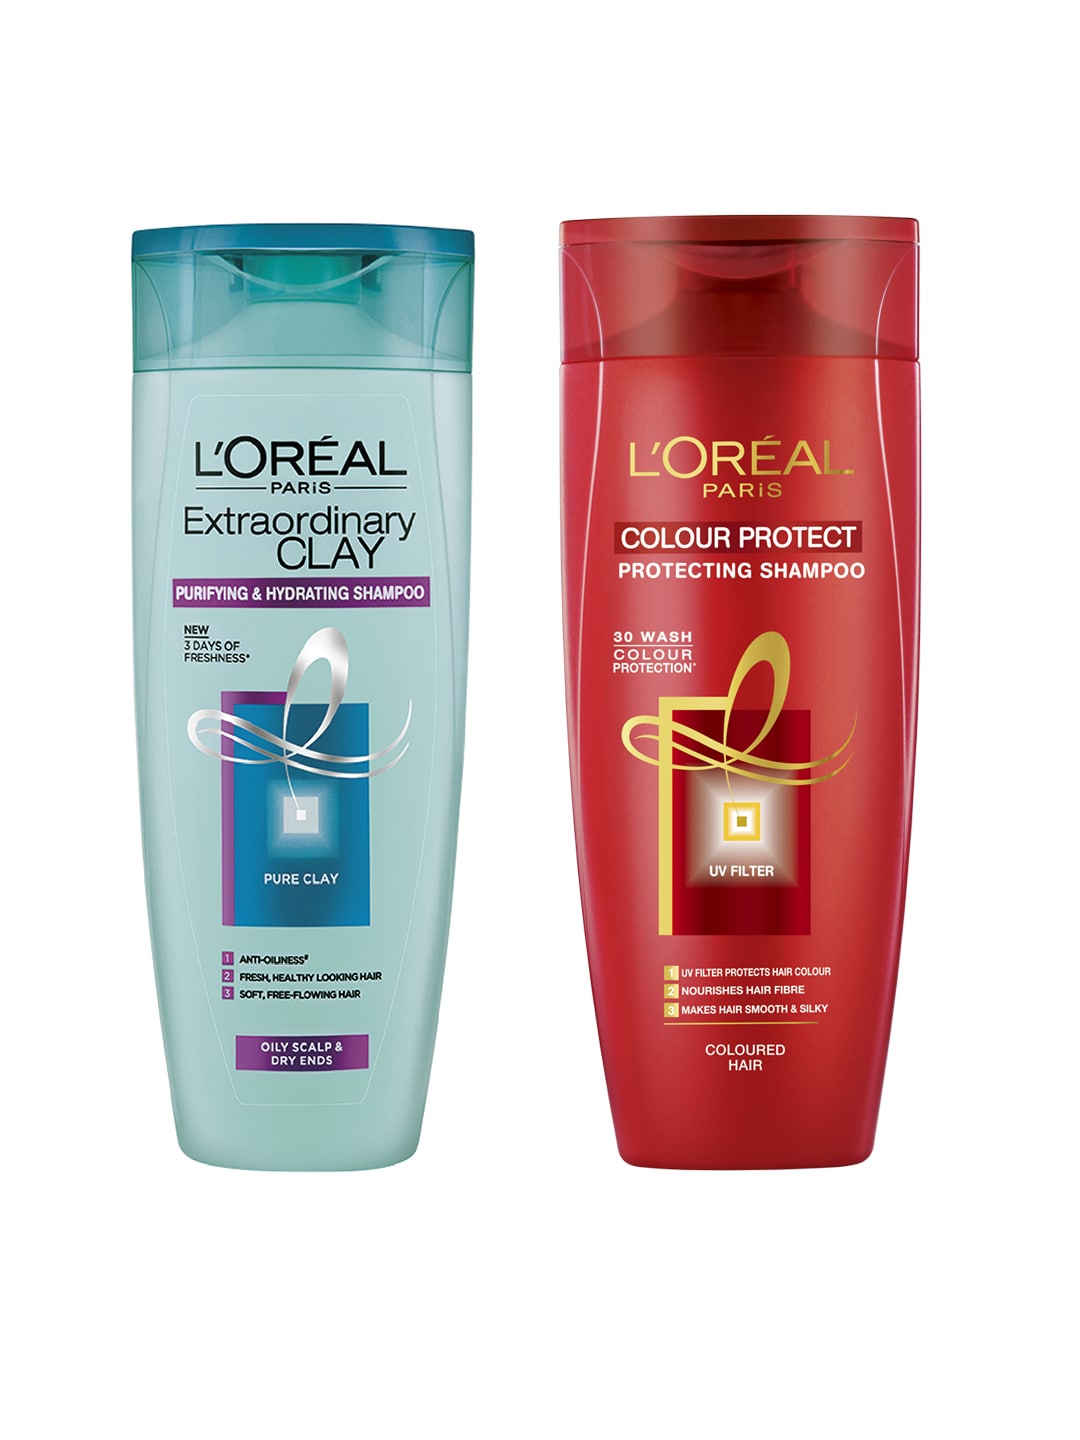 LOreal Paris Set of Colour Protect Shampoo & Extraordinary Clay Shampoo Price in India